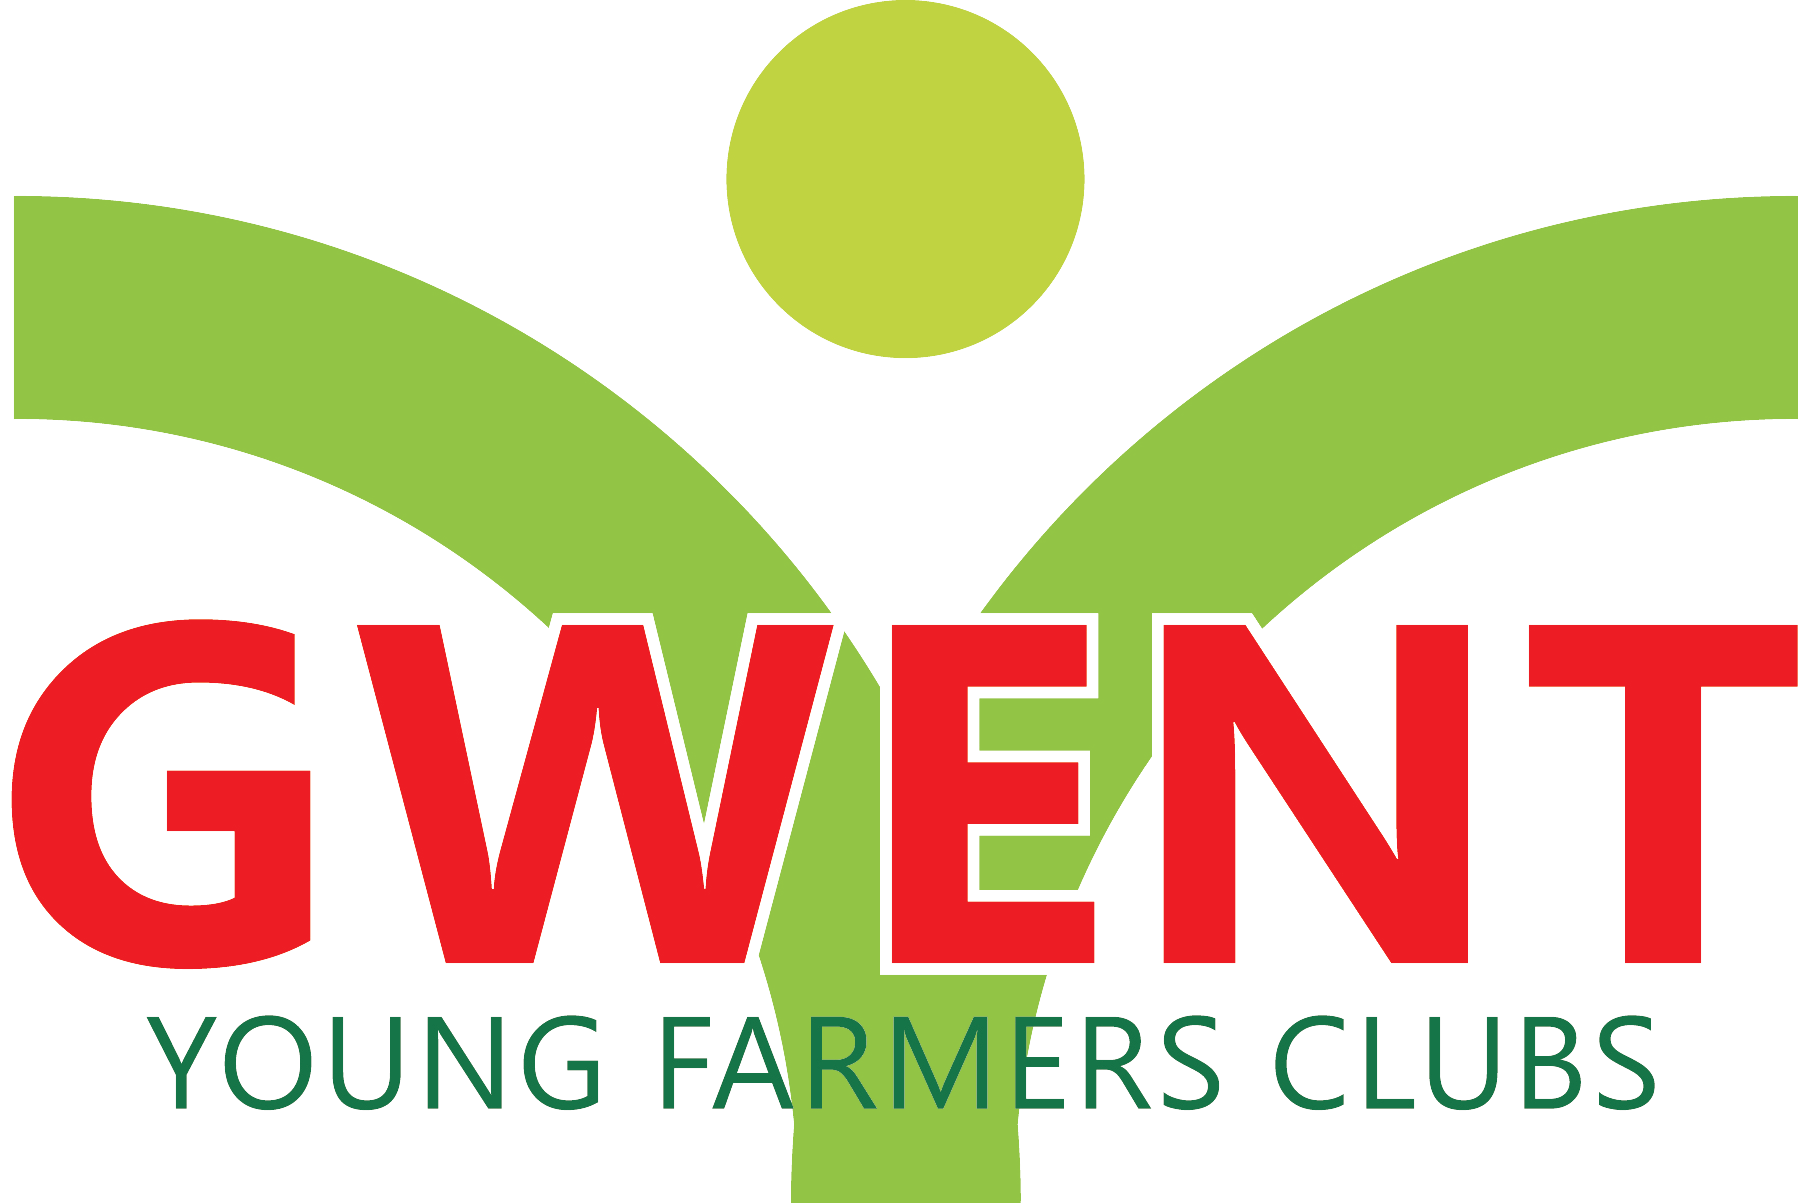 Gwent Young Farmers Clubs (Gwent YFC)